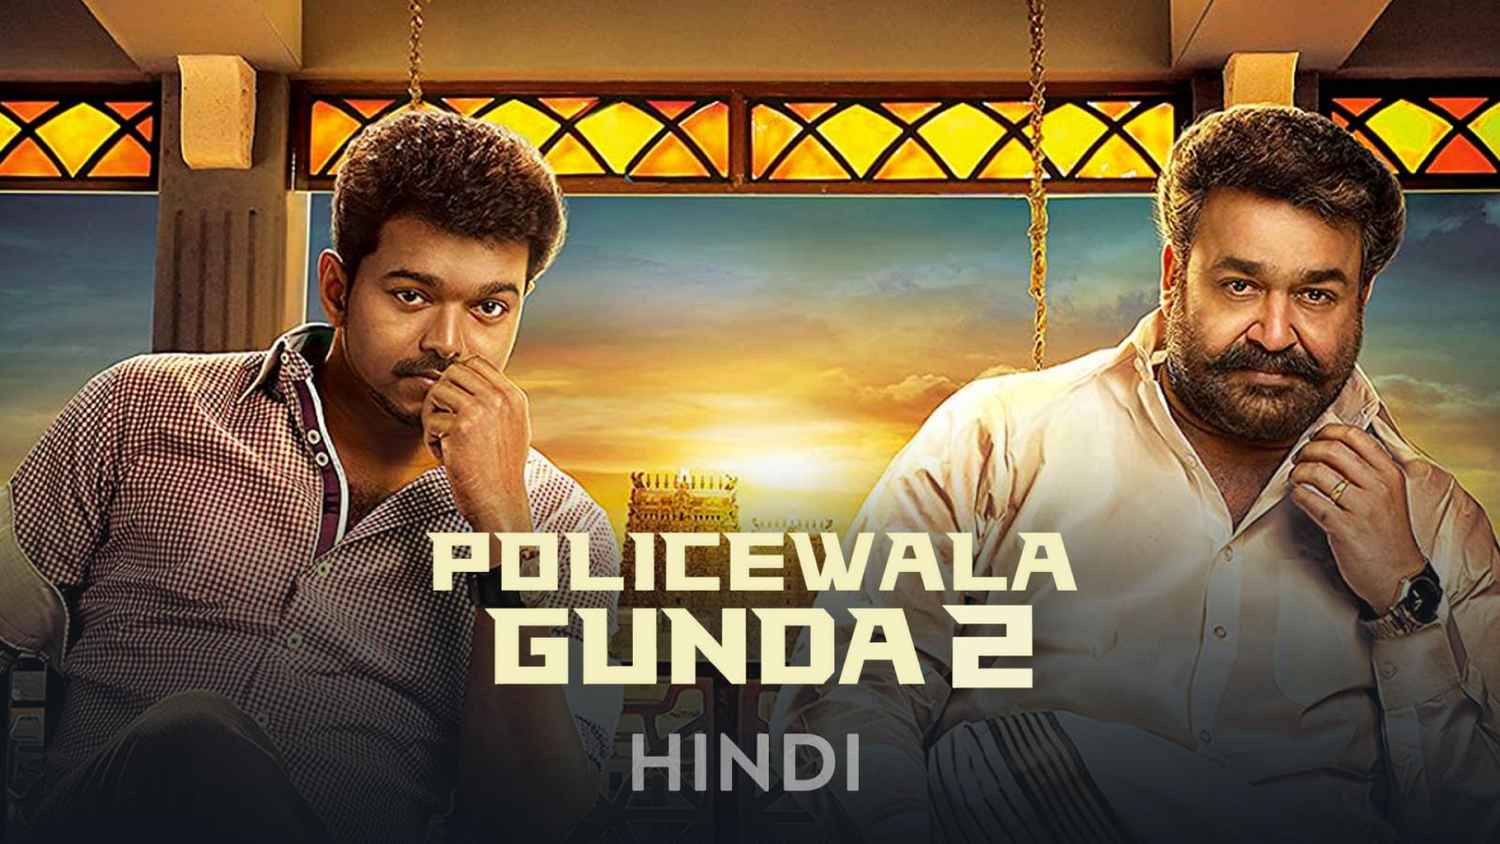 Policewala Gunda 2